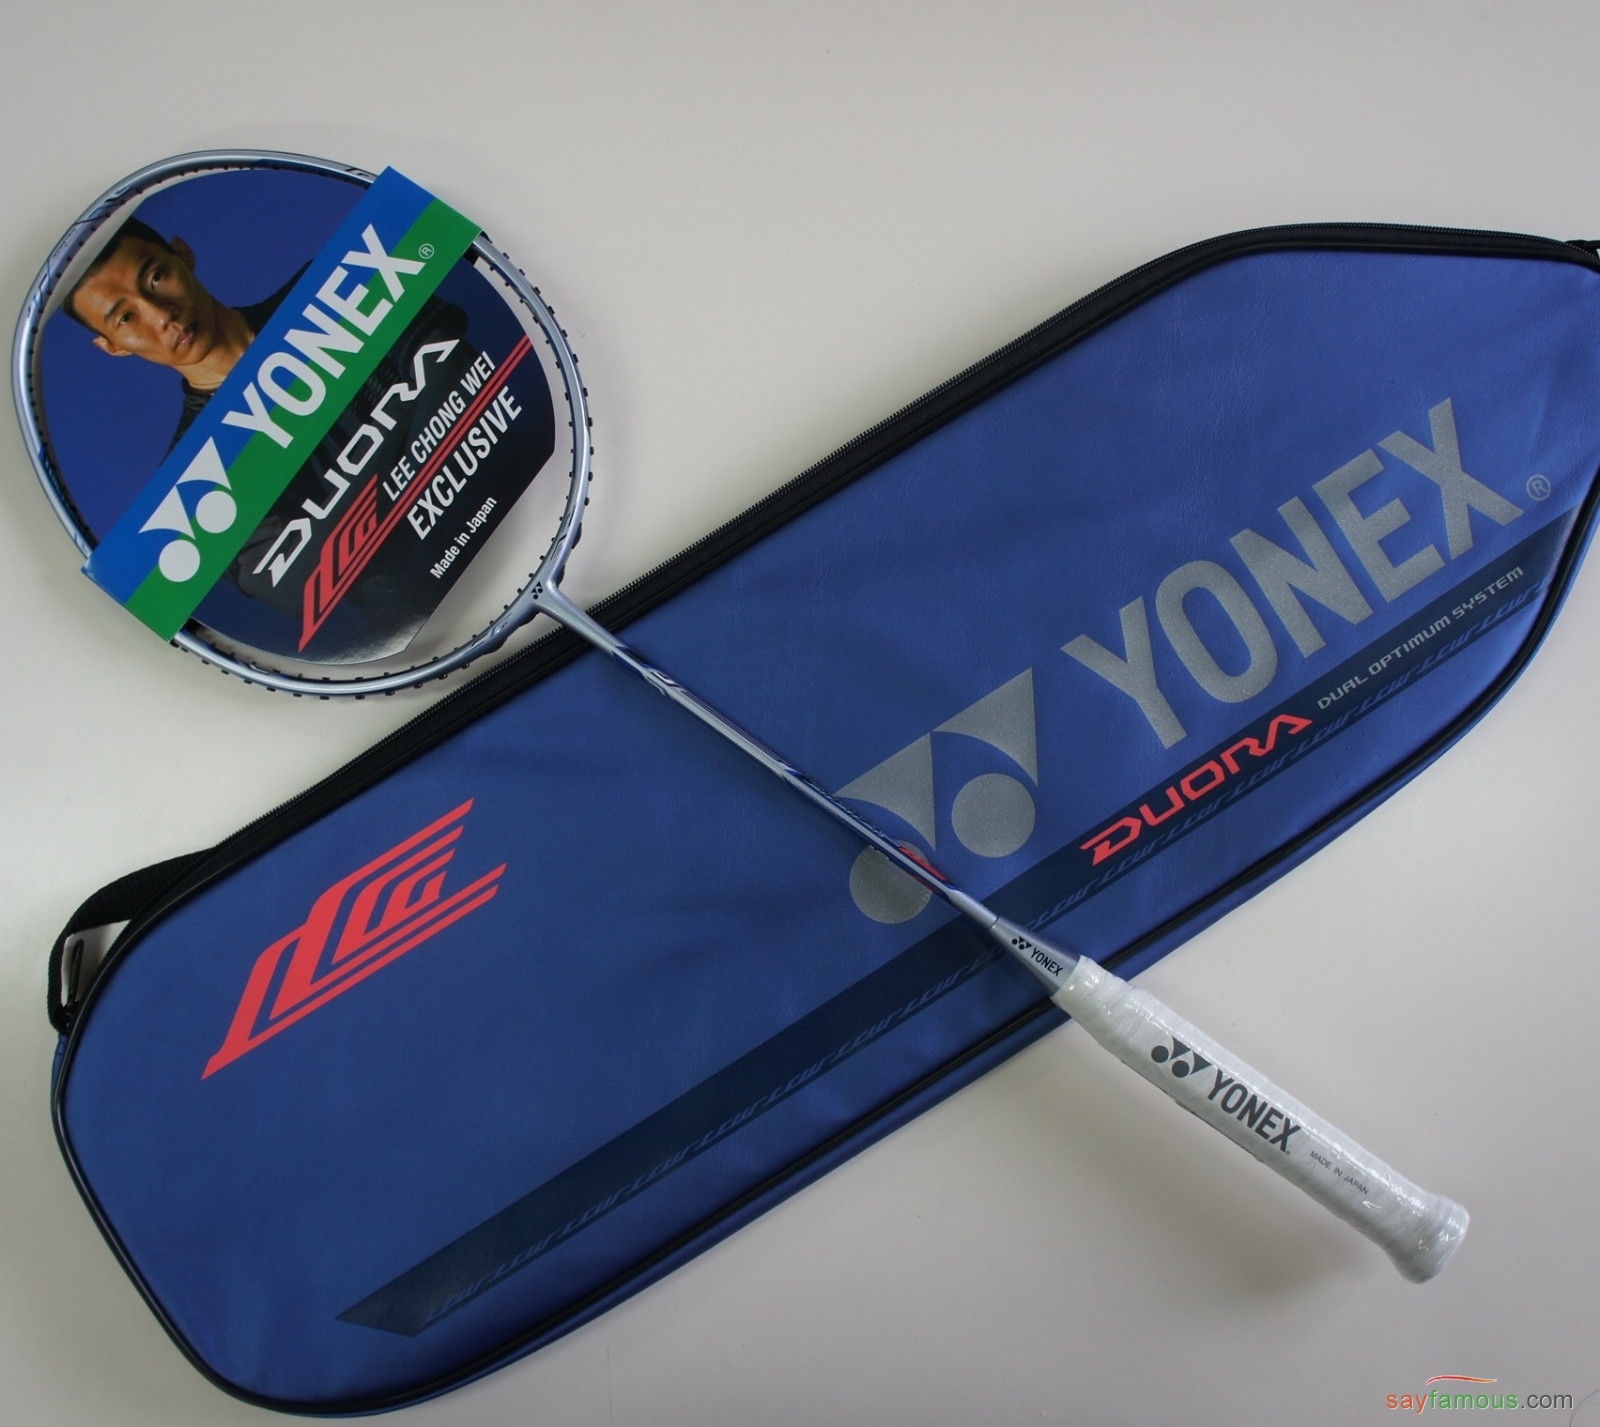 Yonex Badminton Racket HD Desktop Wallpaper Say Something Famous